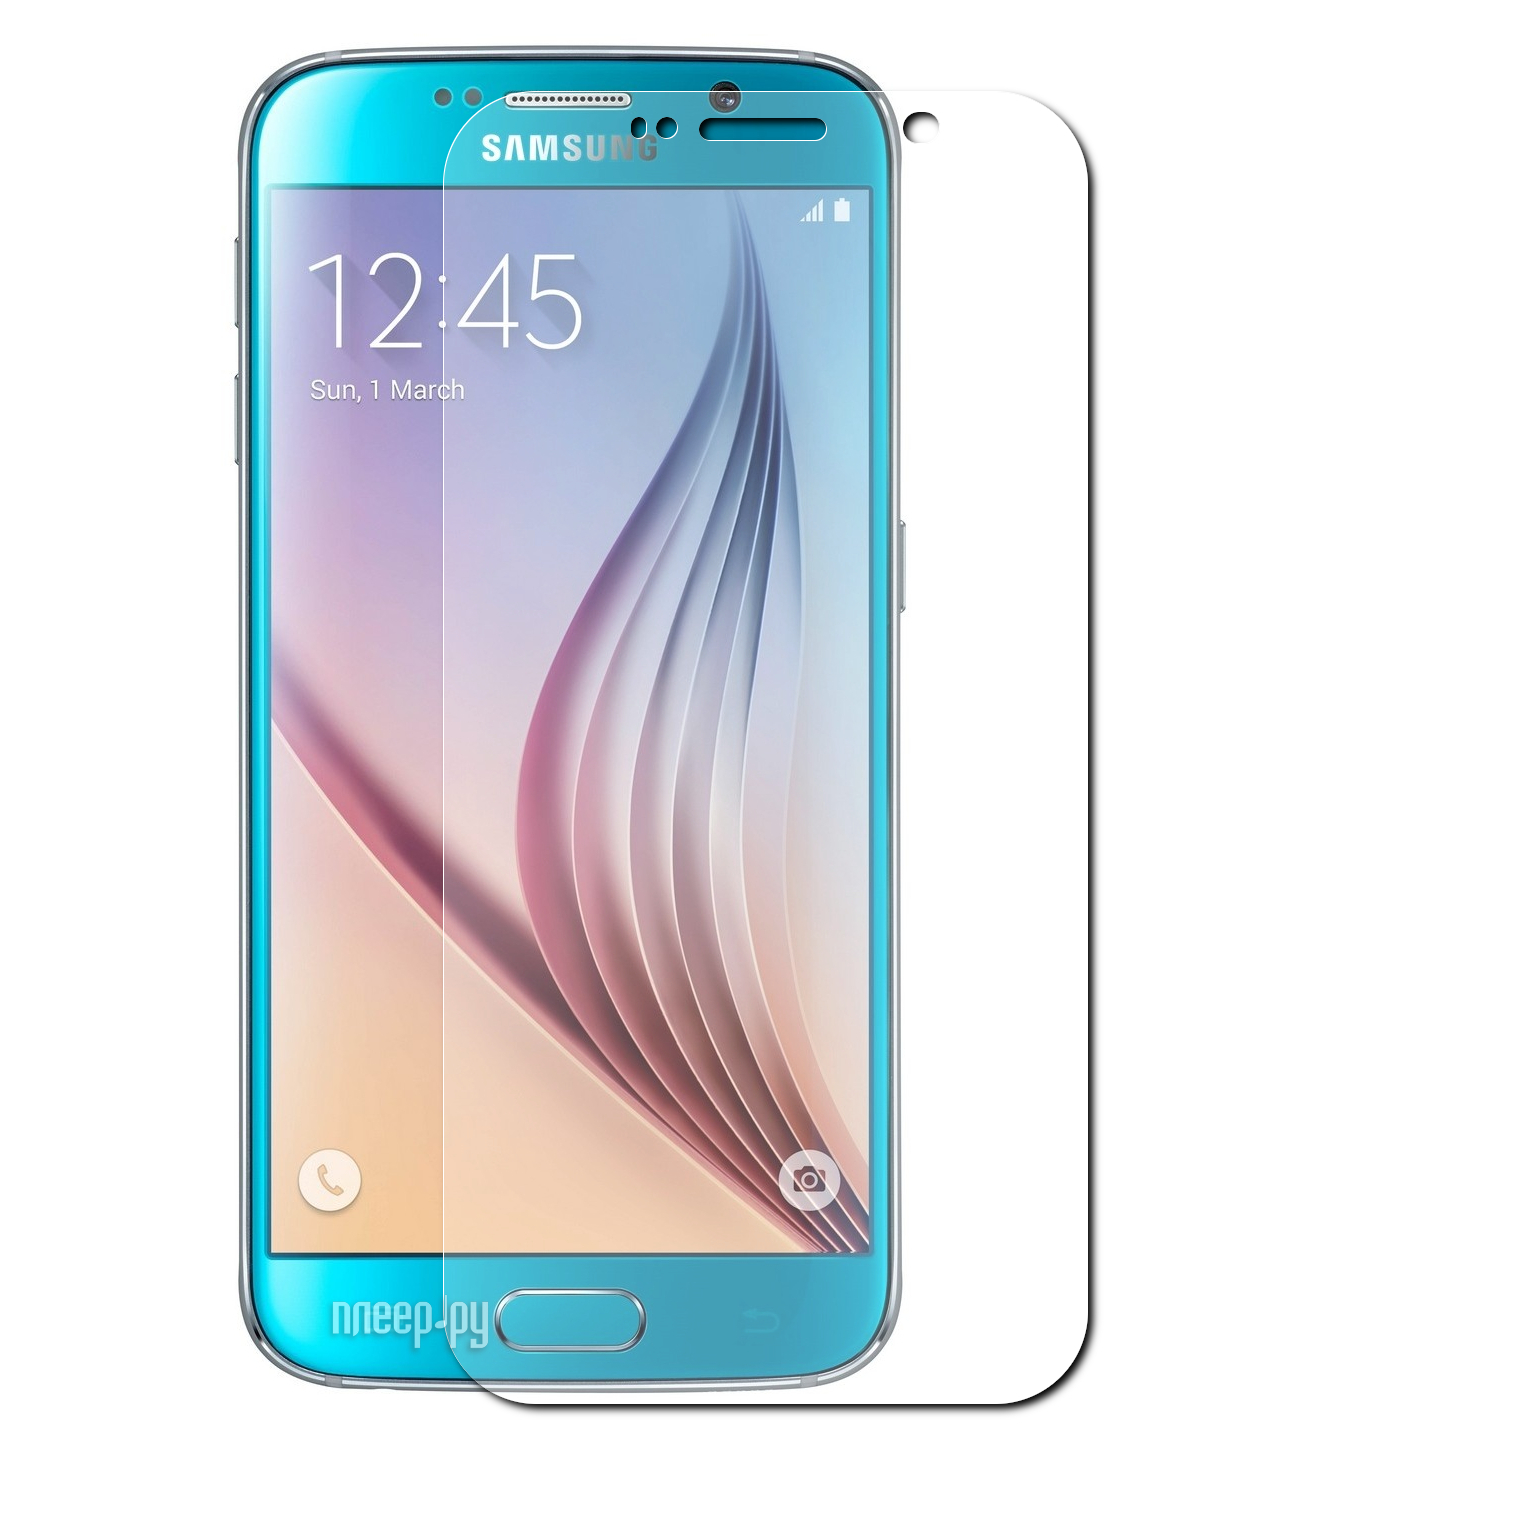    Samsung SM-G920F Galaxy S6 Krutoff Group  21923  251 